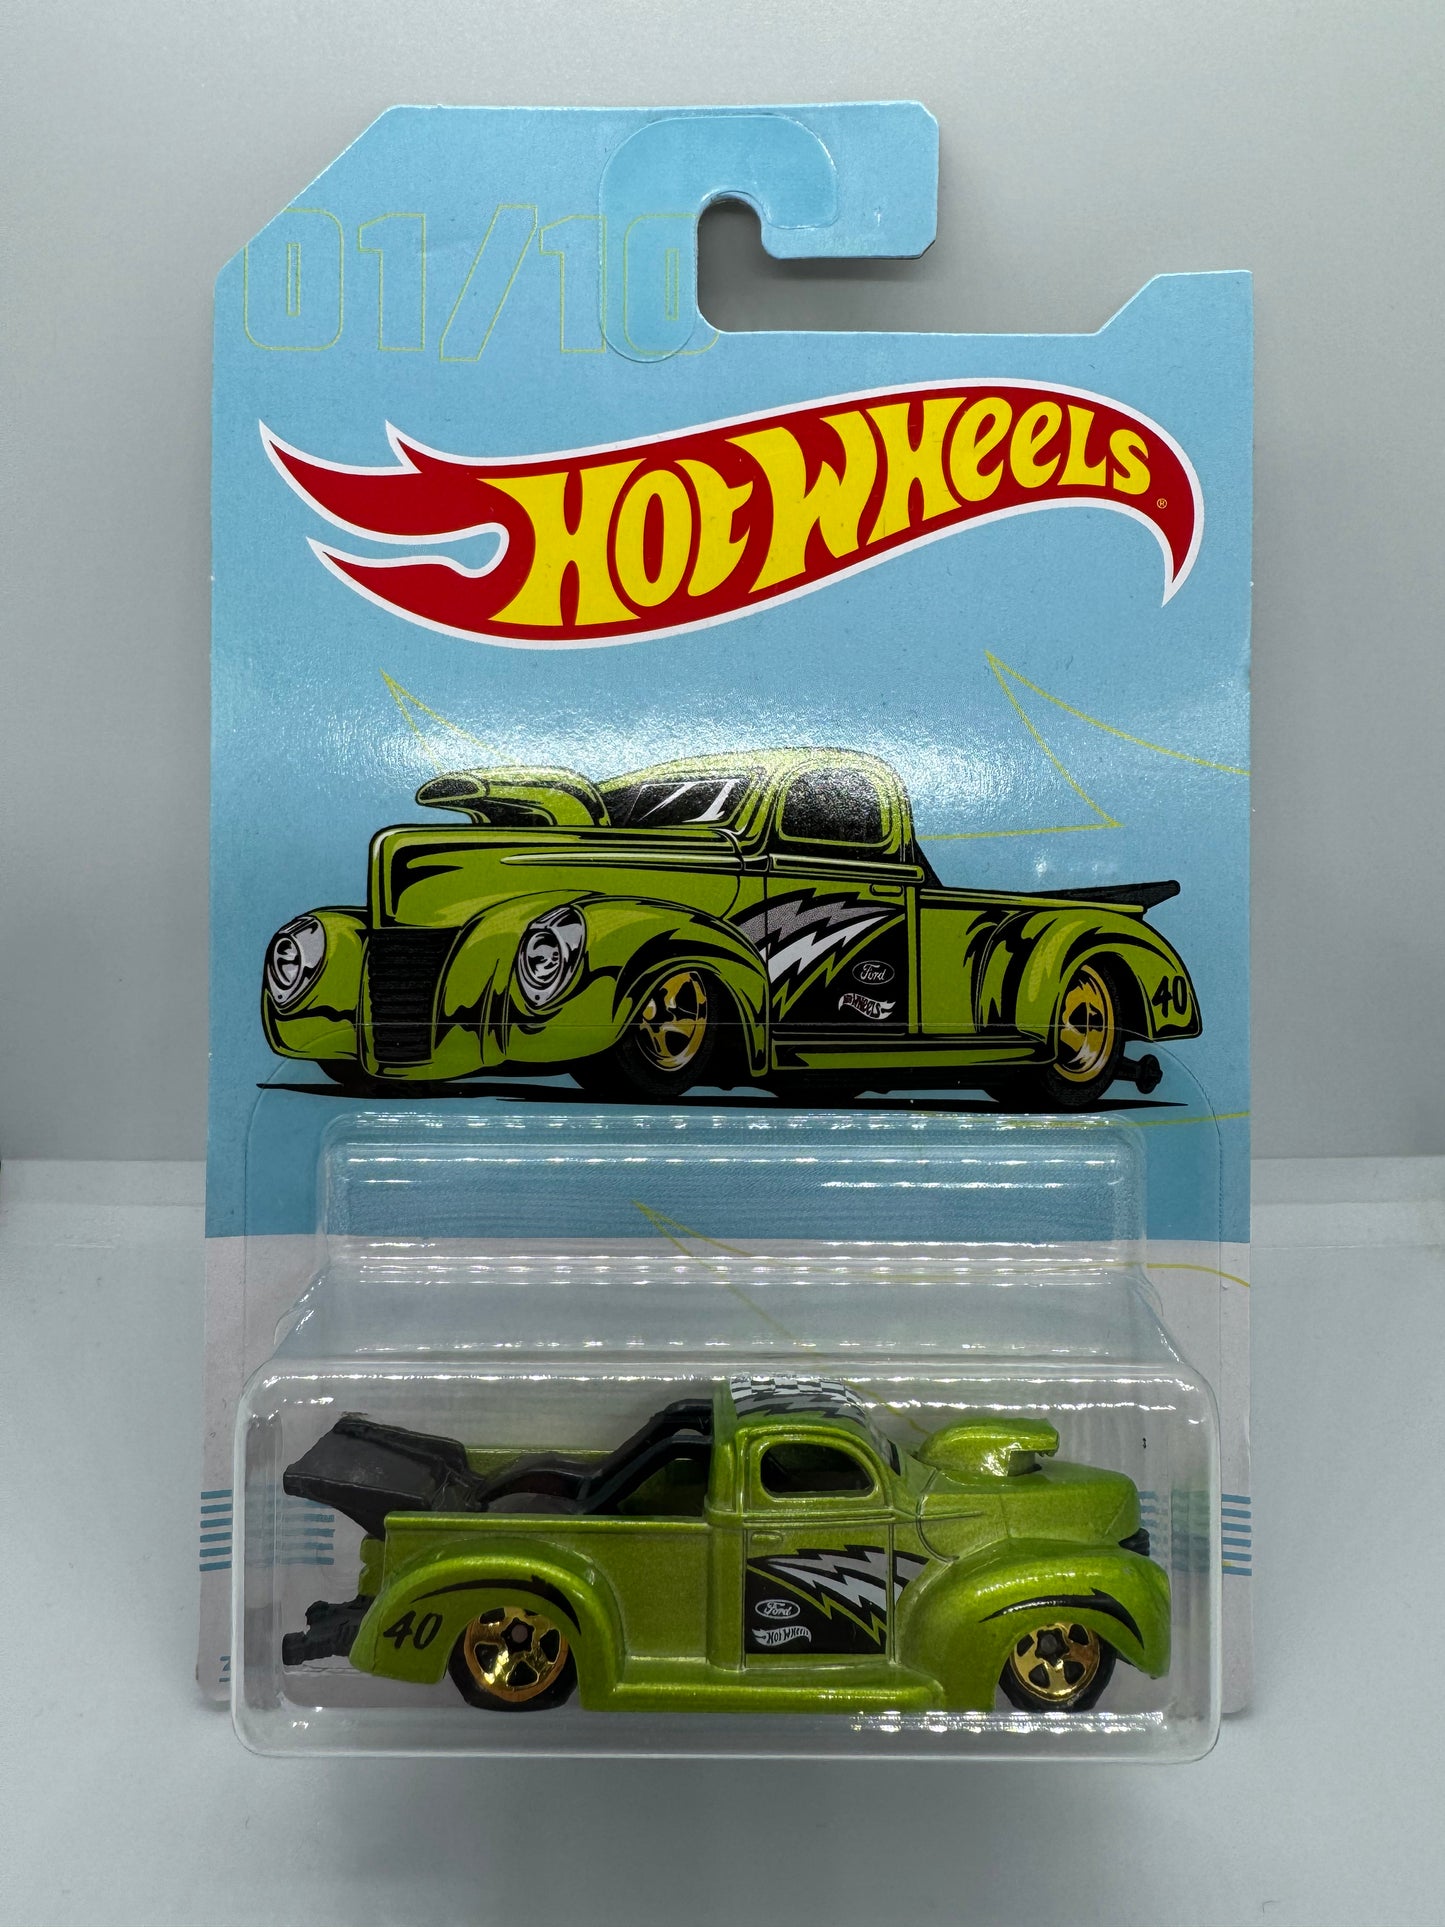 Hot Wheels - ‘40 Ford Drag Car - Walmart Pickup Truck Series